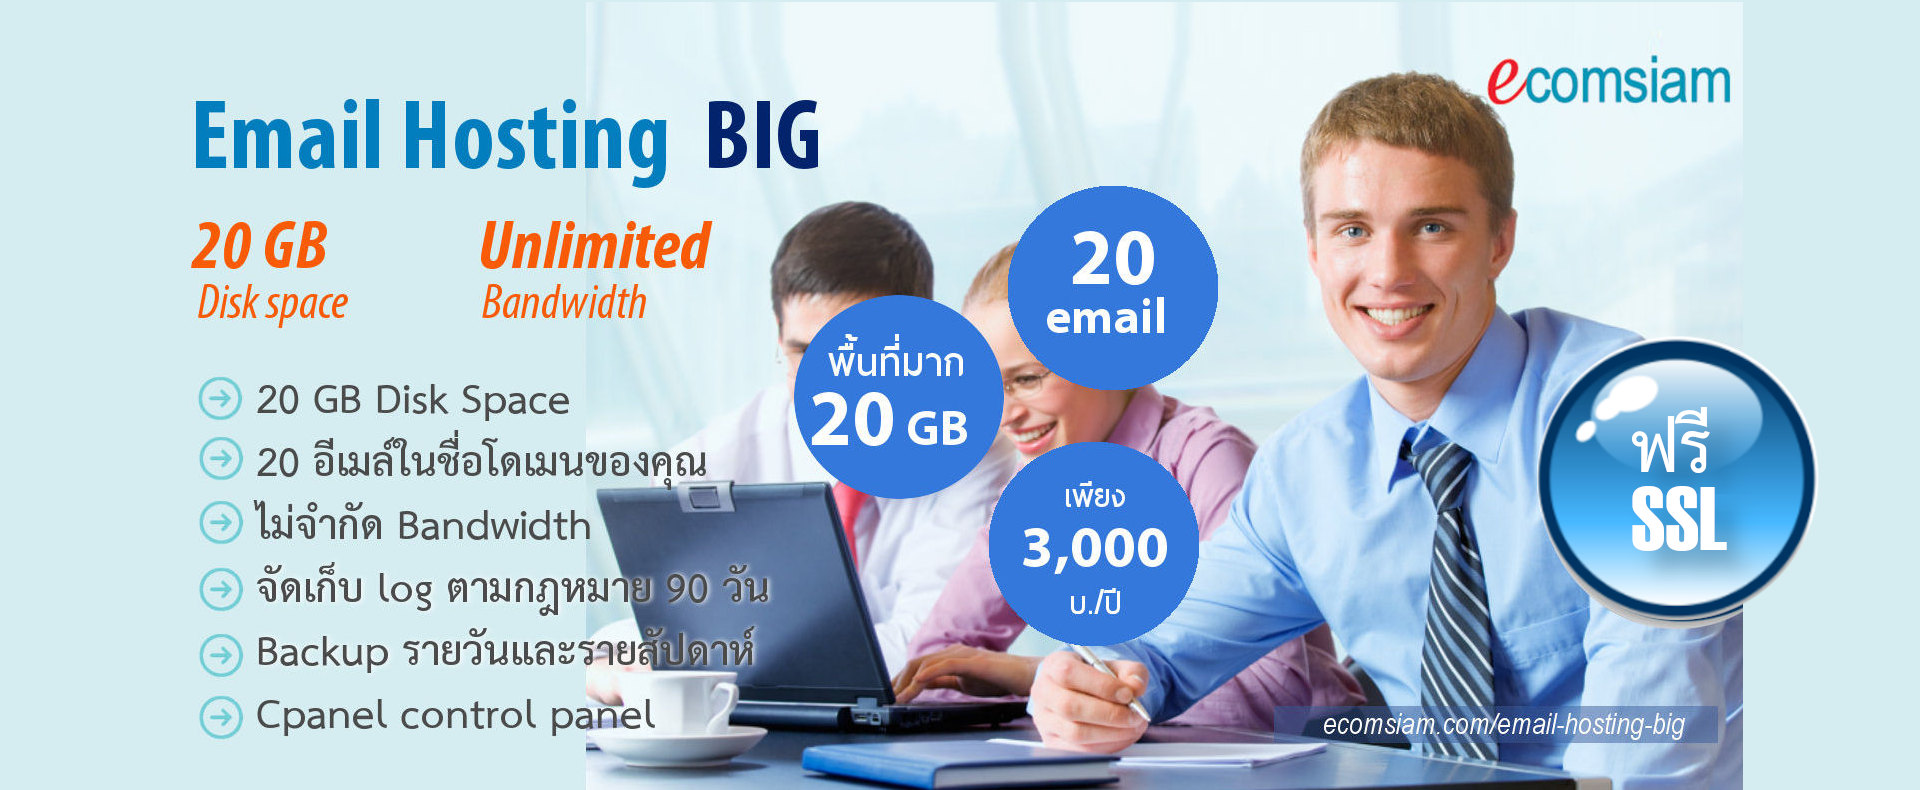 Email hosting thai ไทย - big data พื้นที่มากถึง 20 GB/20 email เพียง 3000 บาทต่อปี พร้อมใบรับรอง SSL